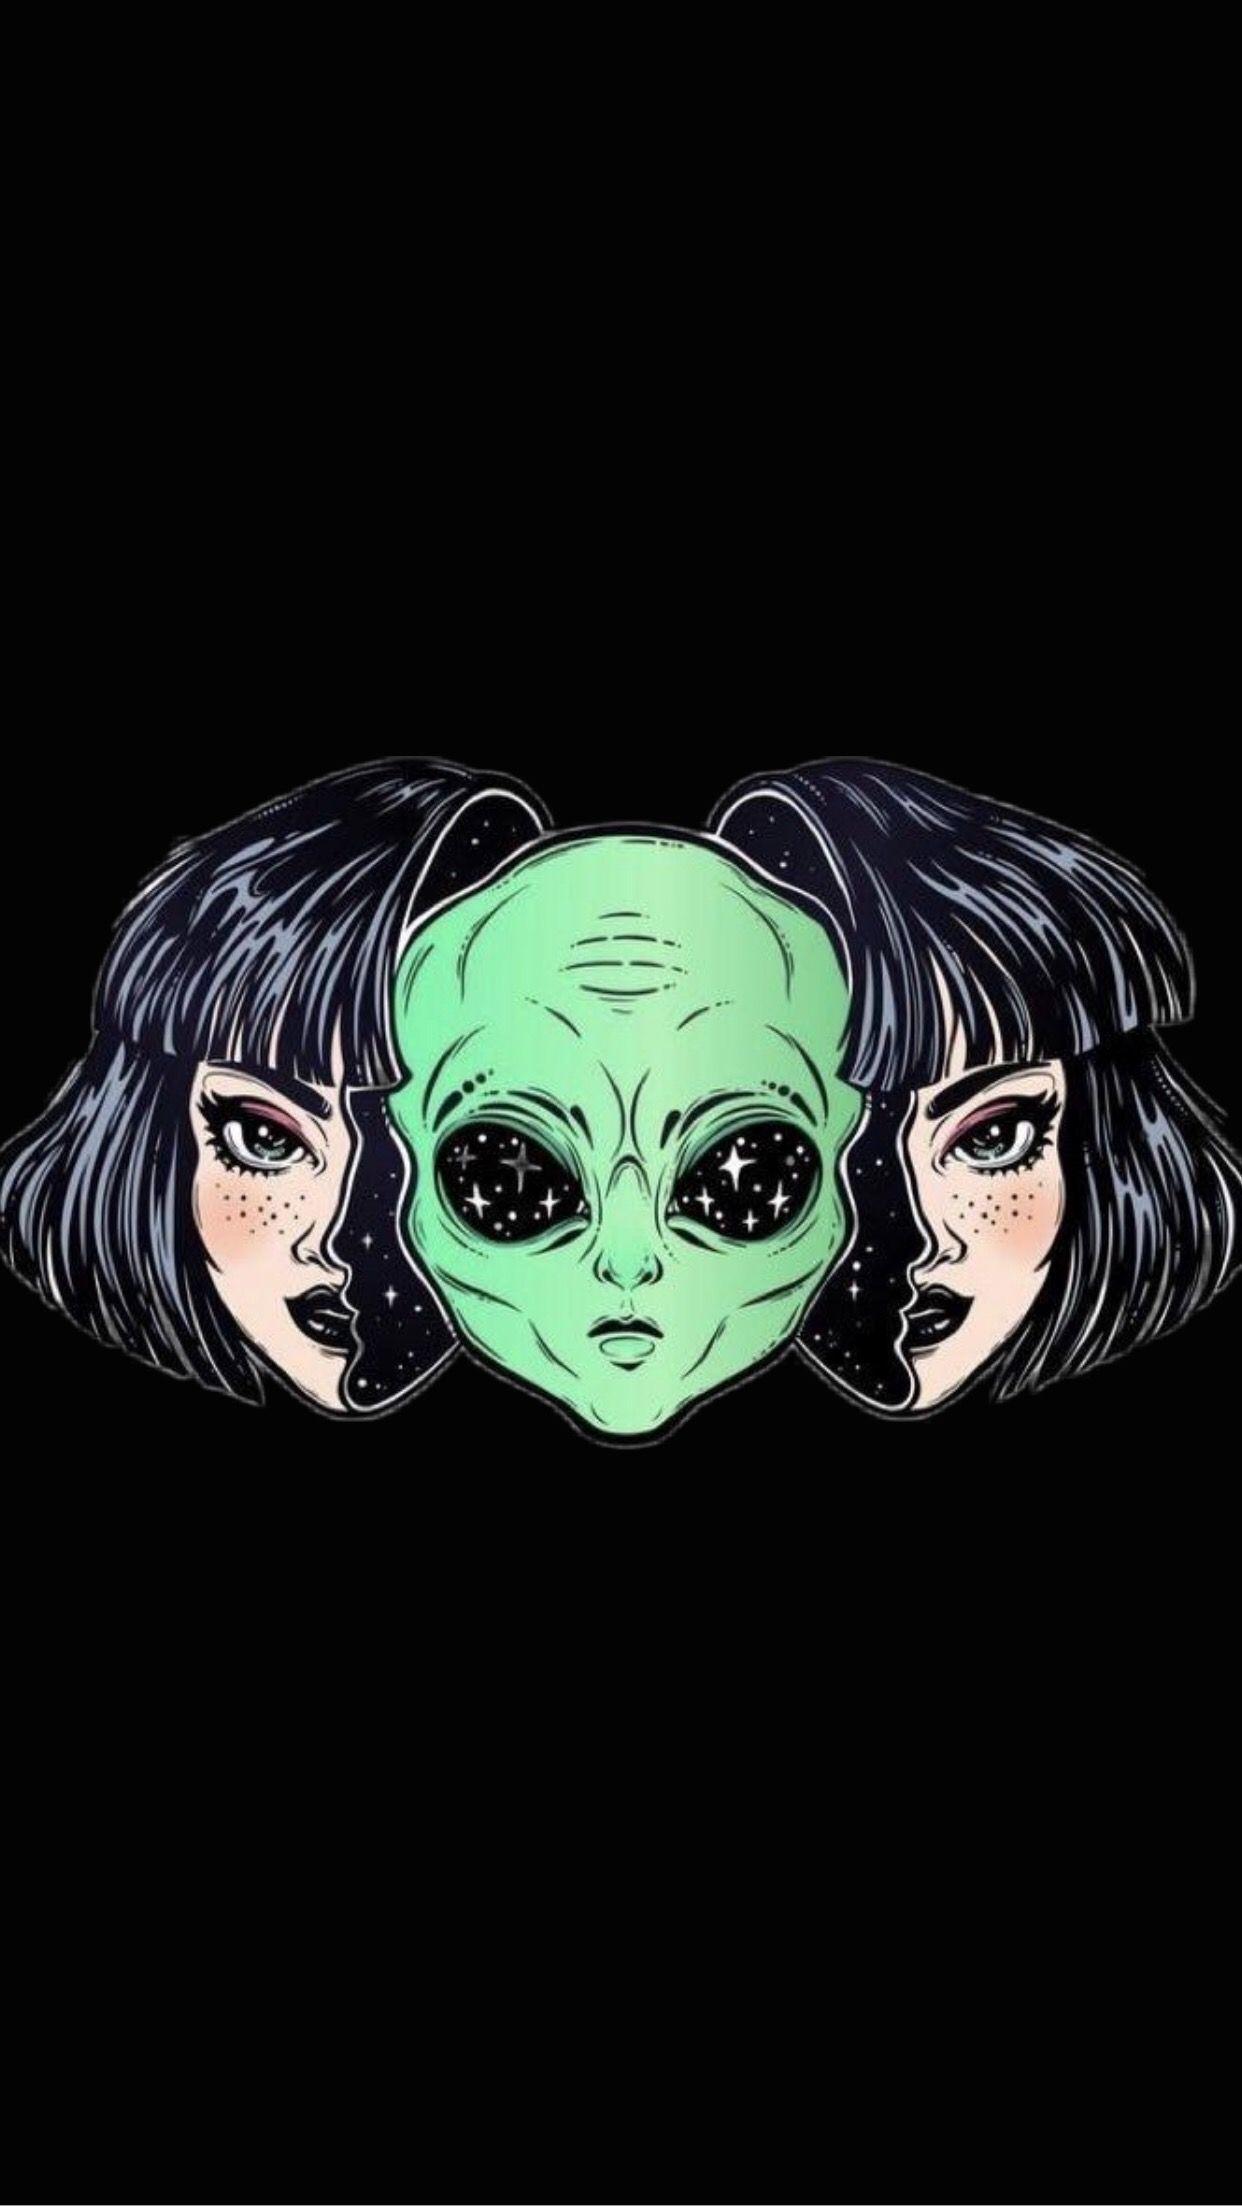 Alien Girl!. Art!. iPhone wallpaper, Tumblr iphone